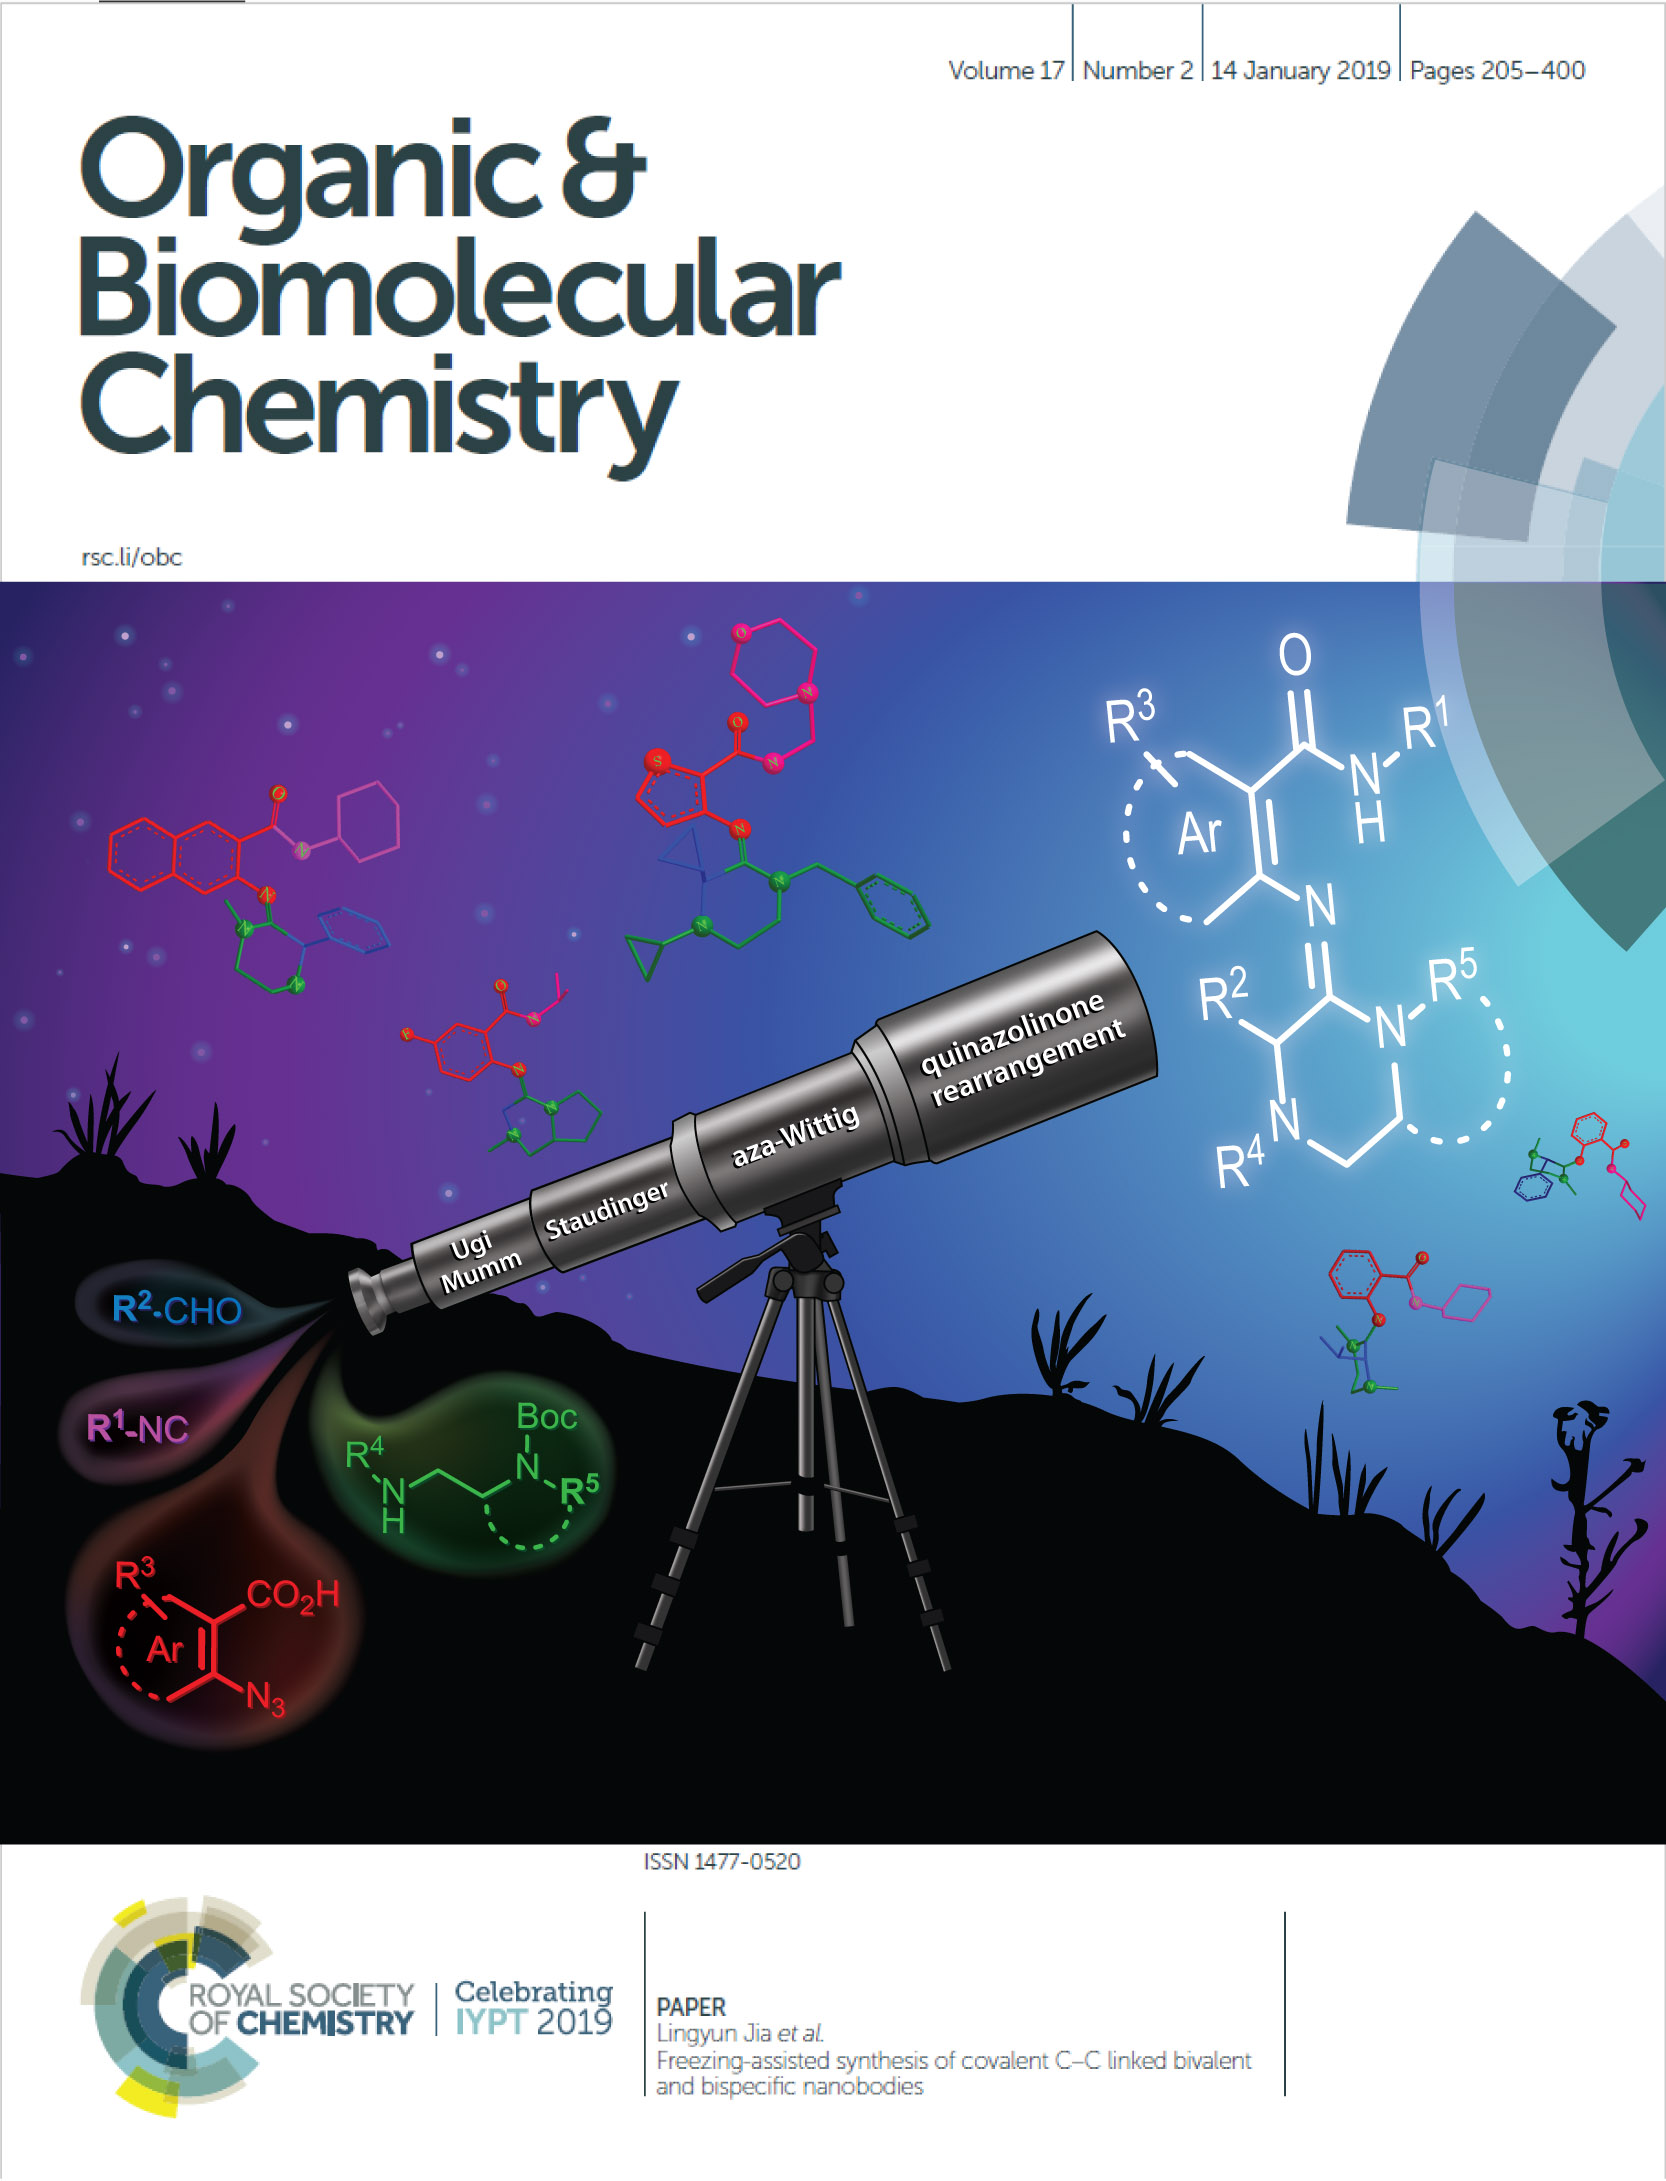 Organic & Biomolecular Chemistry journal volume 17 Number 2 cover